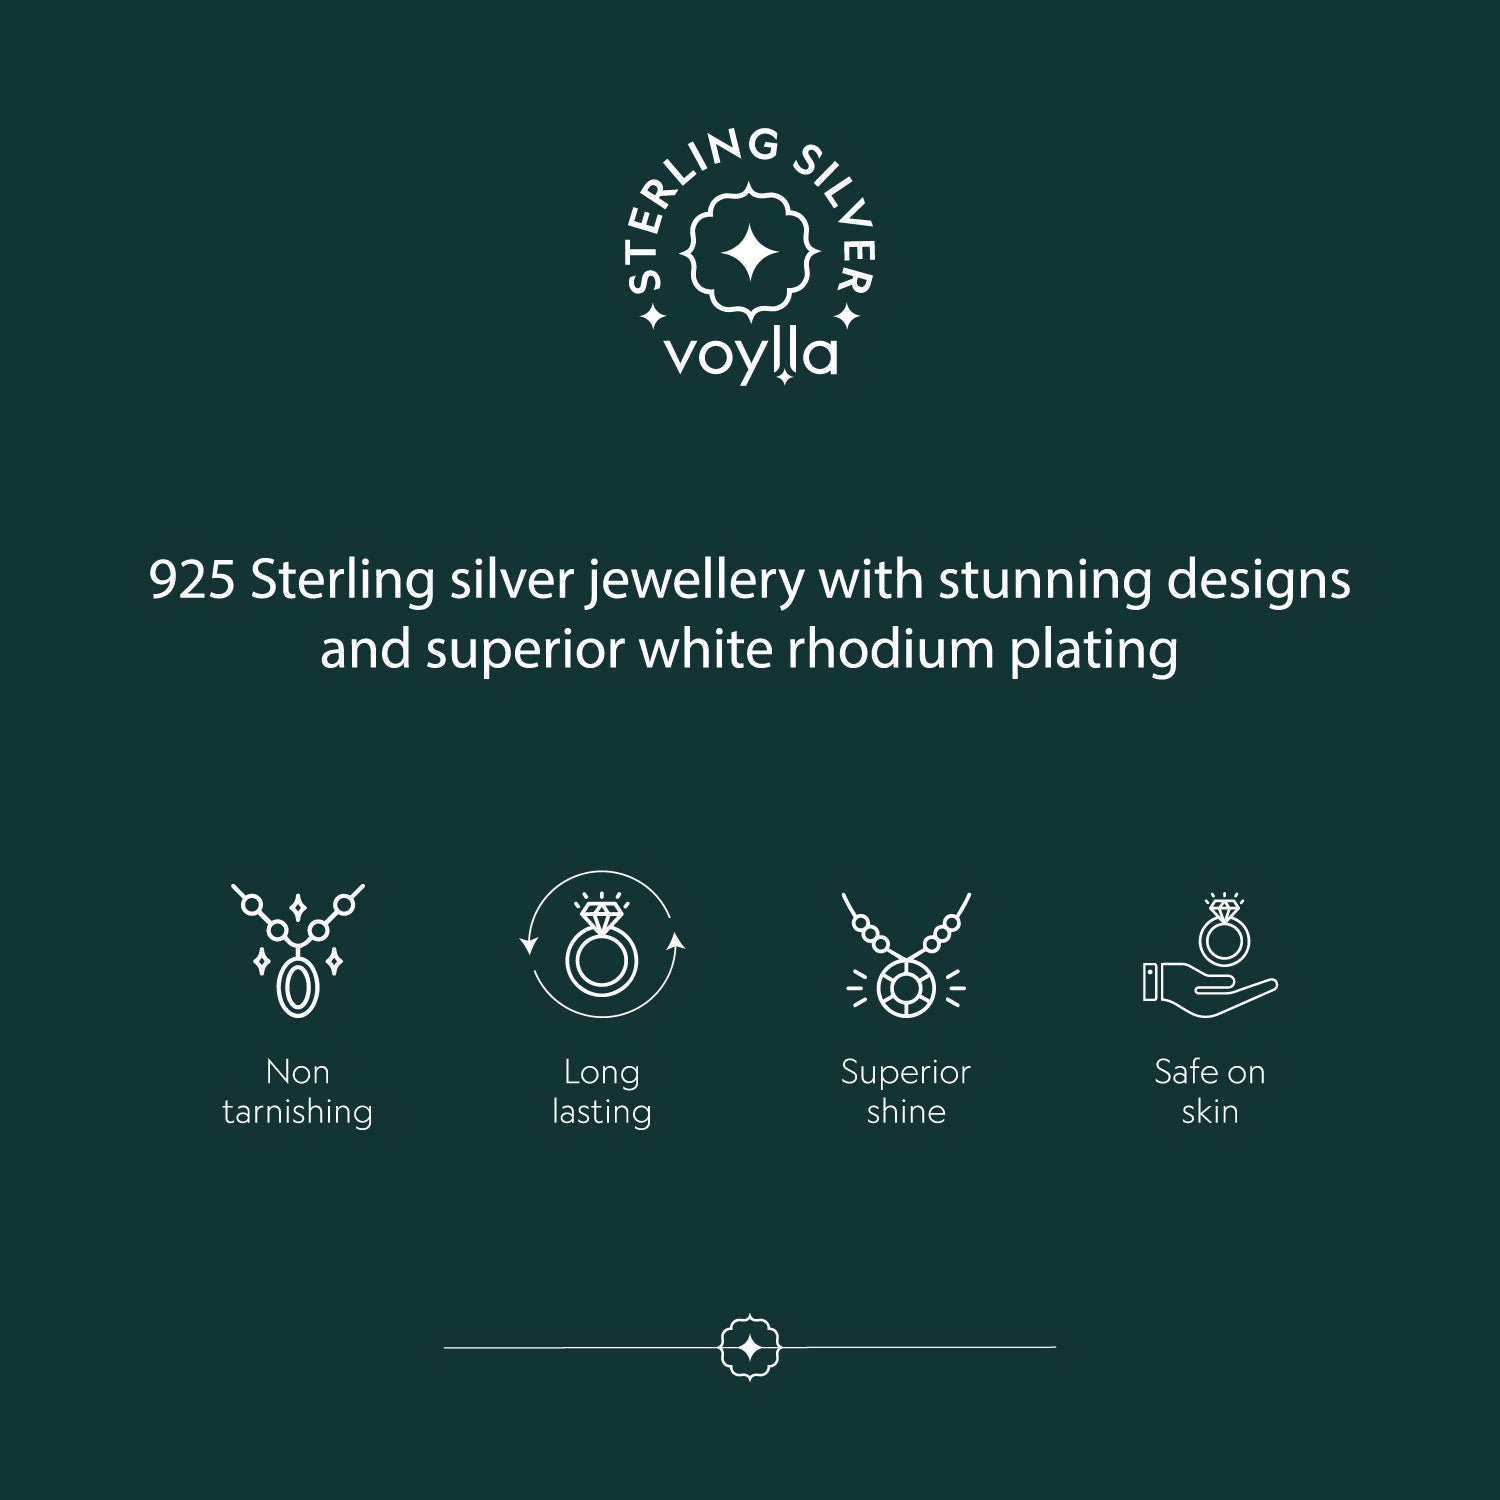 Sterling Silver Alphabet G Round Cut CZ Pendant